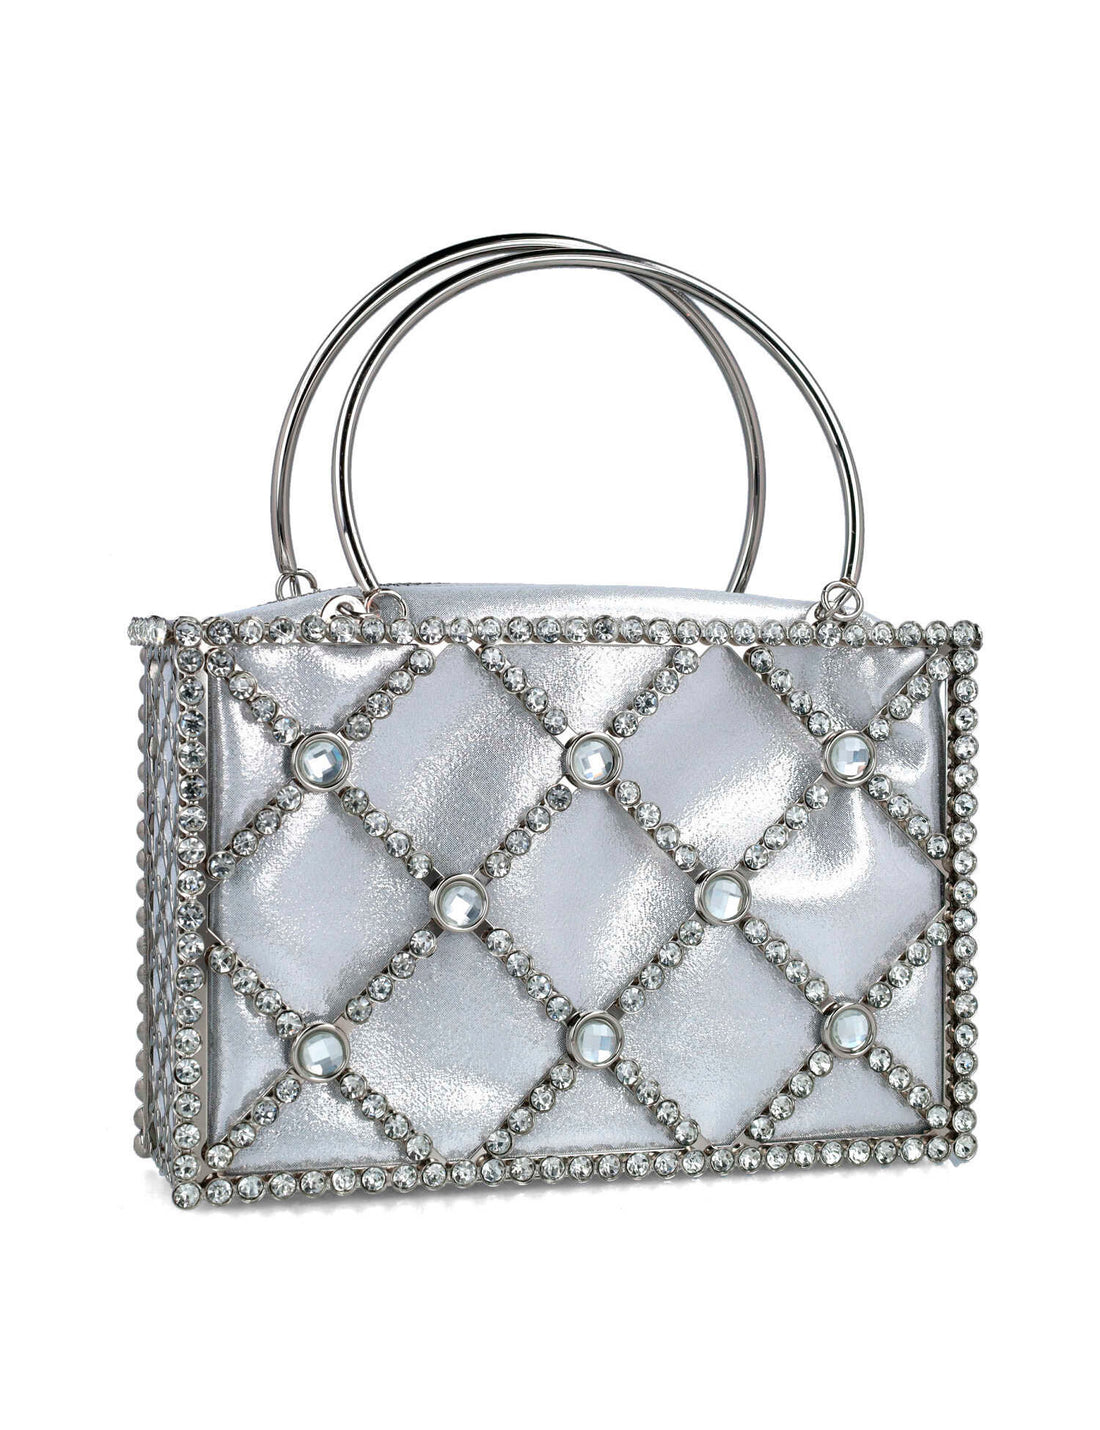 Embellished Square Handbag With Round Straps_85720_09_02